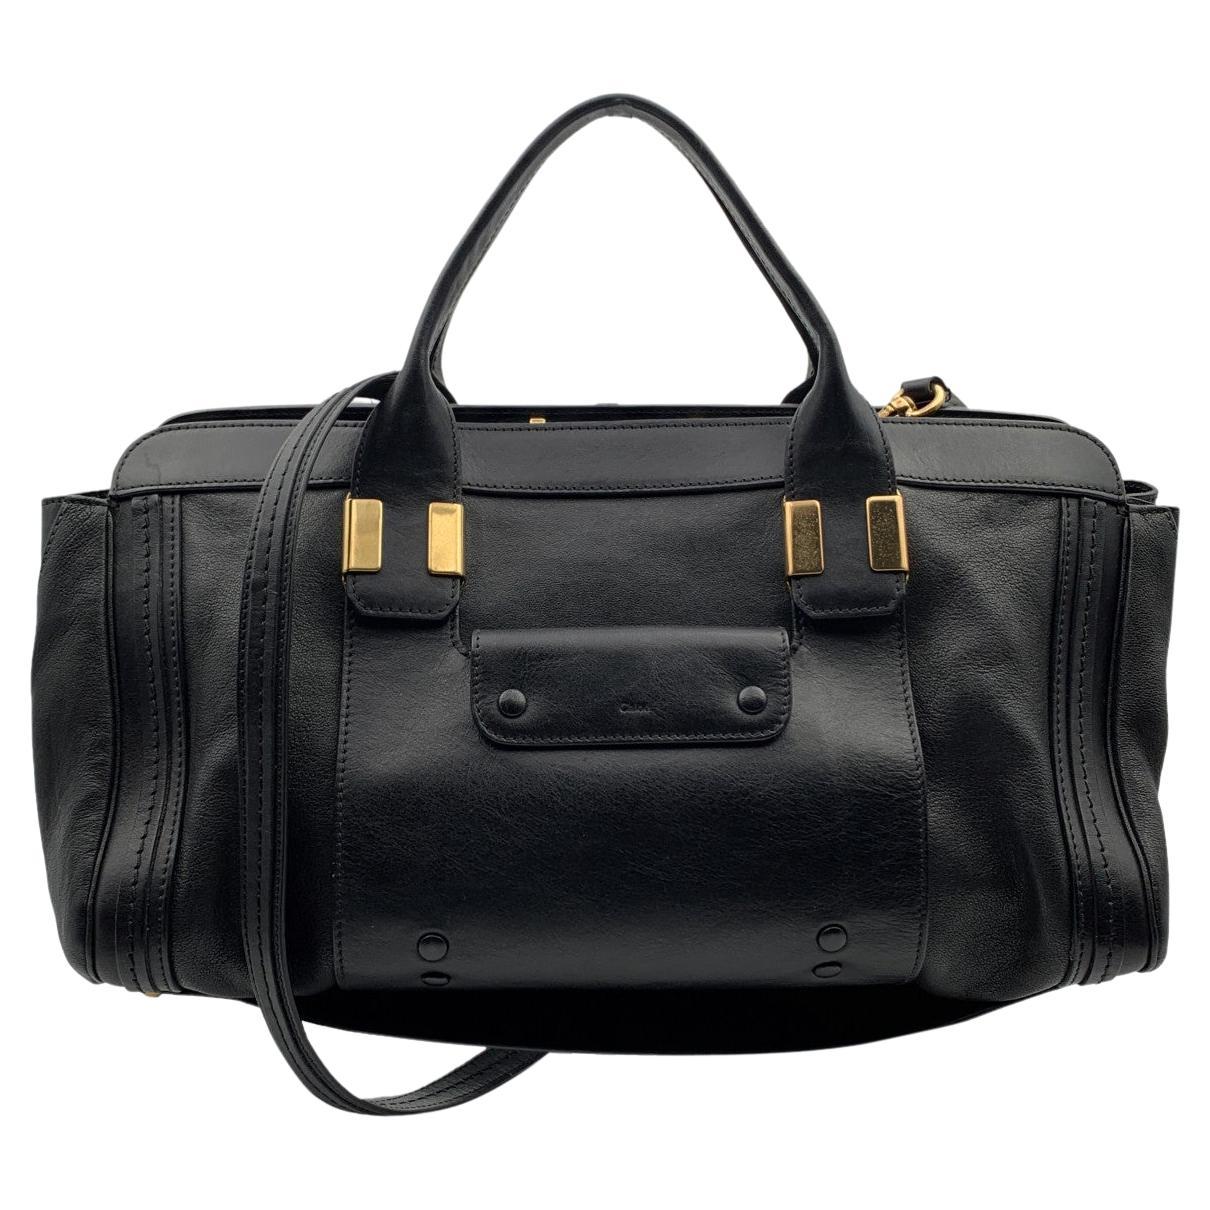 Chloe Black Leather Alice Bag Satchel Handbag with Strap